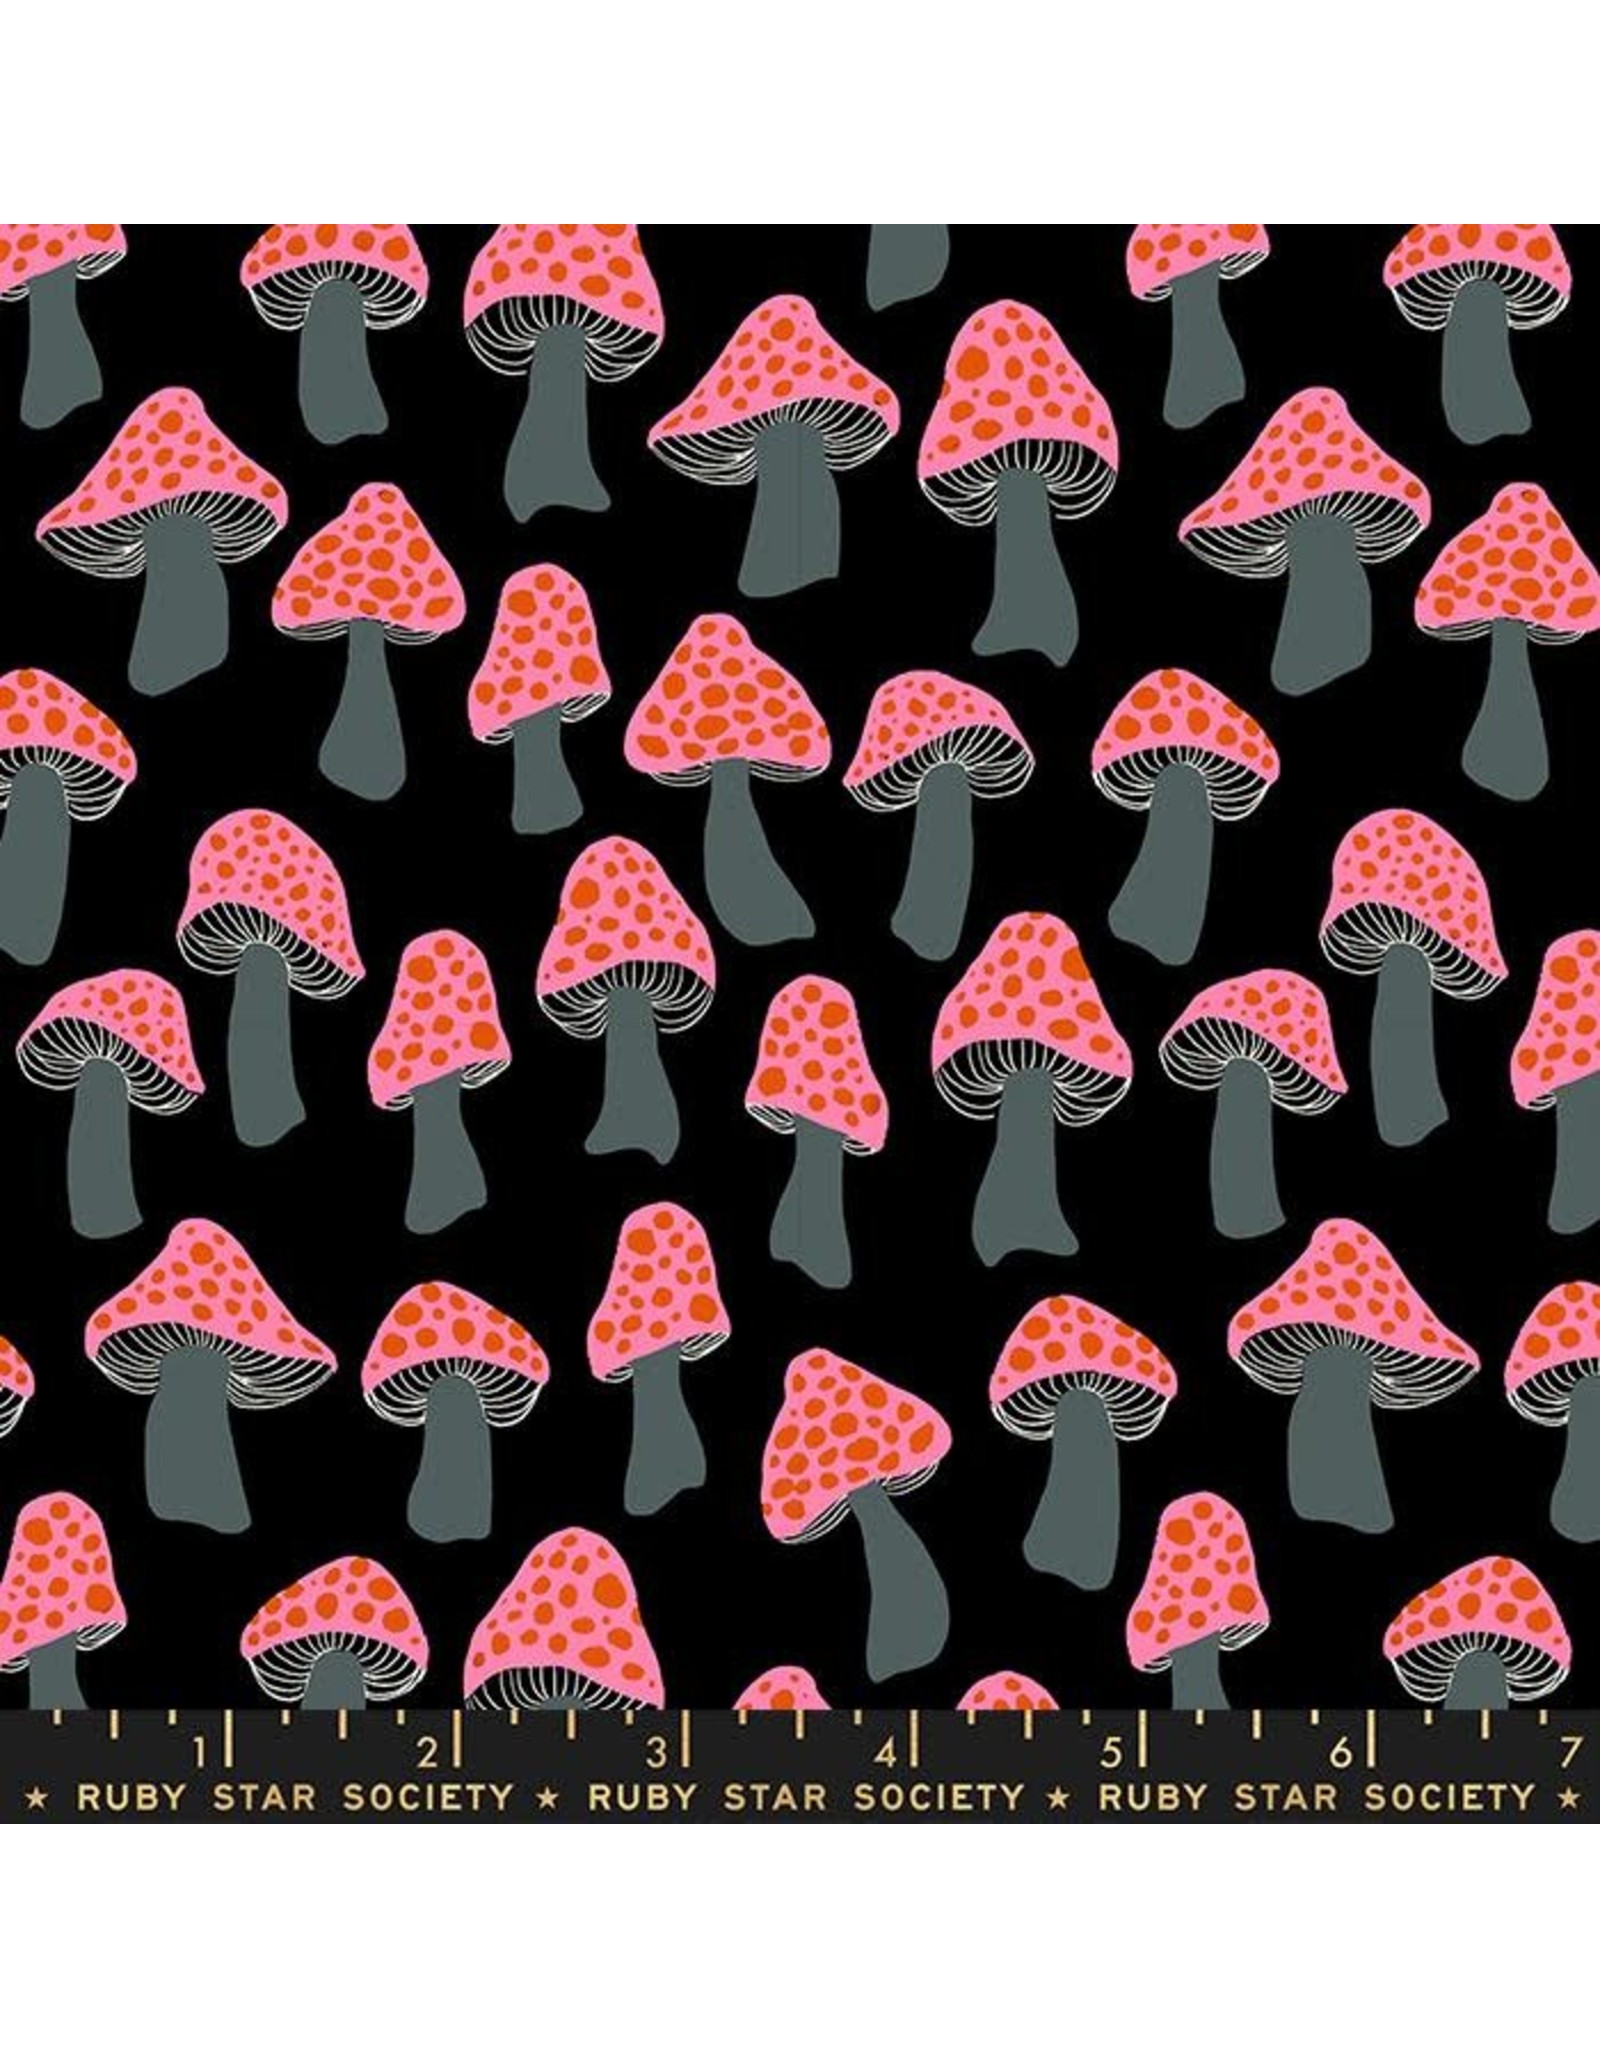 Sarah Watts Firefly, Mushrooms in Black, Fabric Half-Yards